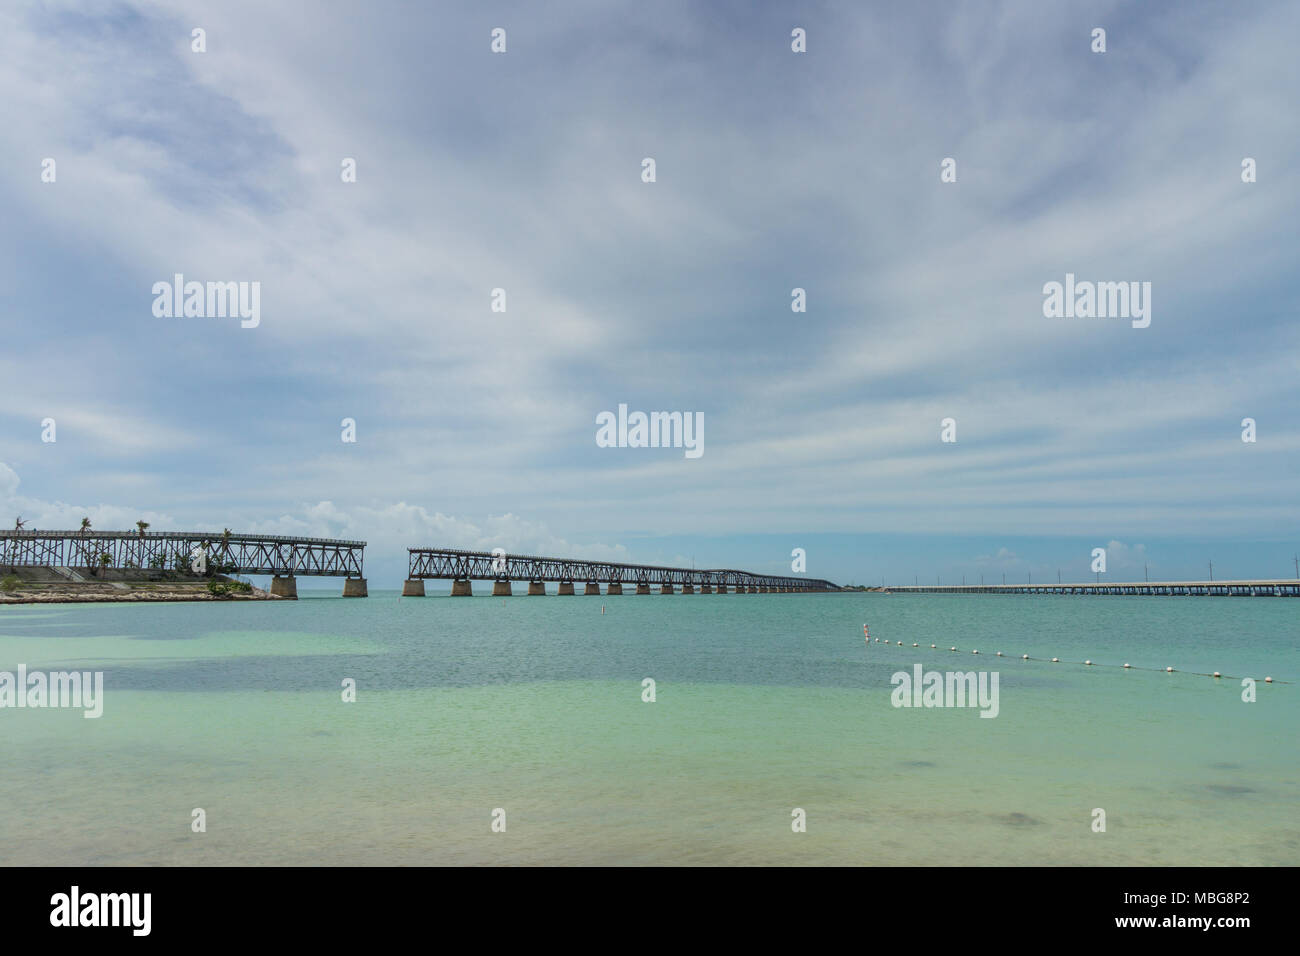 USA, Florida, Ancient overseas railway bridge in bahia honda state park from beach Stock Photo